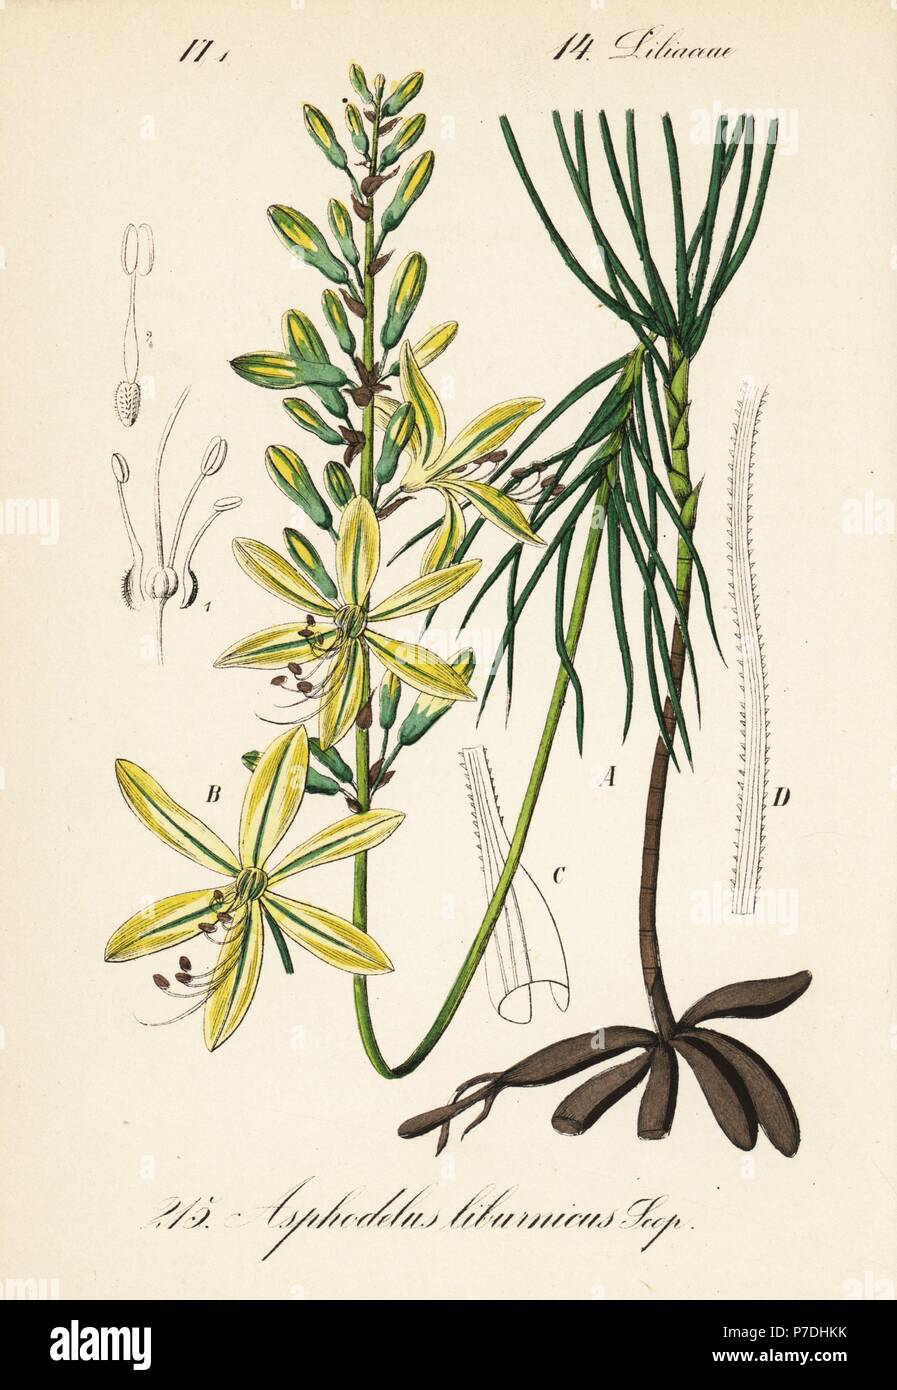 Jacob's rod, Asphodeline liburnica (Asphodelus liburnicus). Handcoloured lithograph from Diederich von Schlechtendal's German Flora (Flora von Deutschland), Jena, 1871. Stock Photo